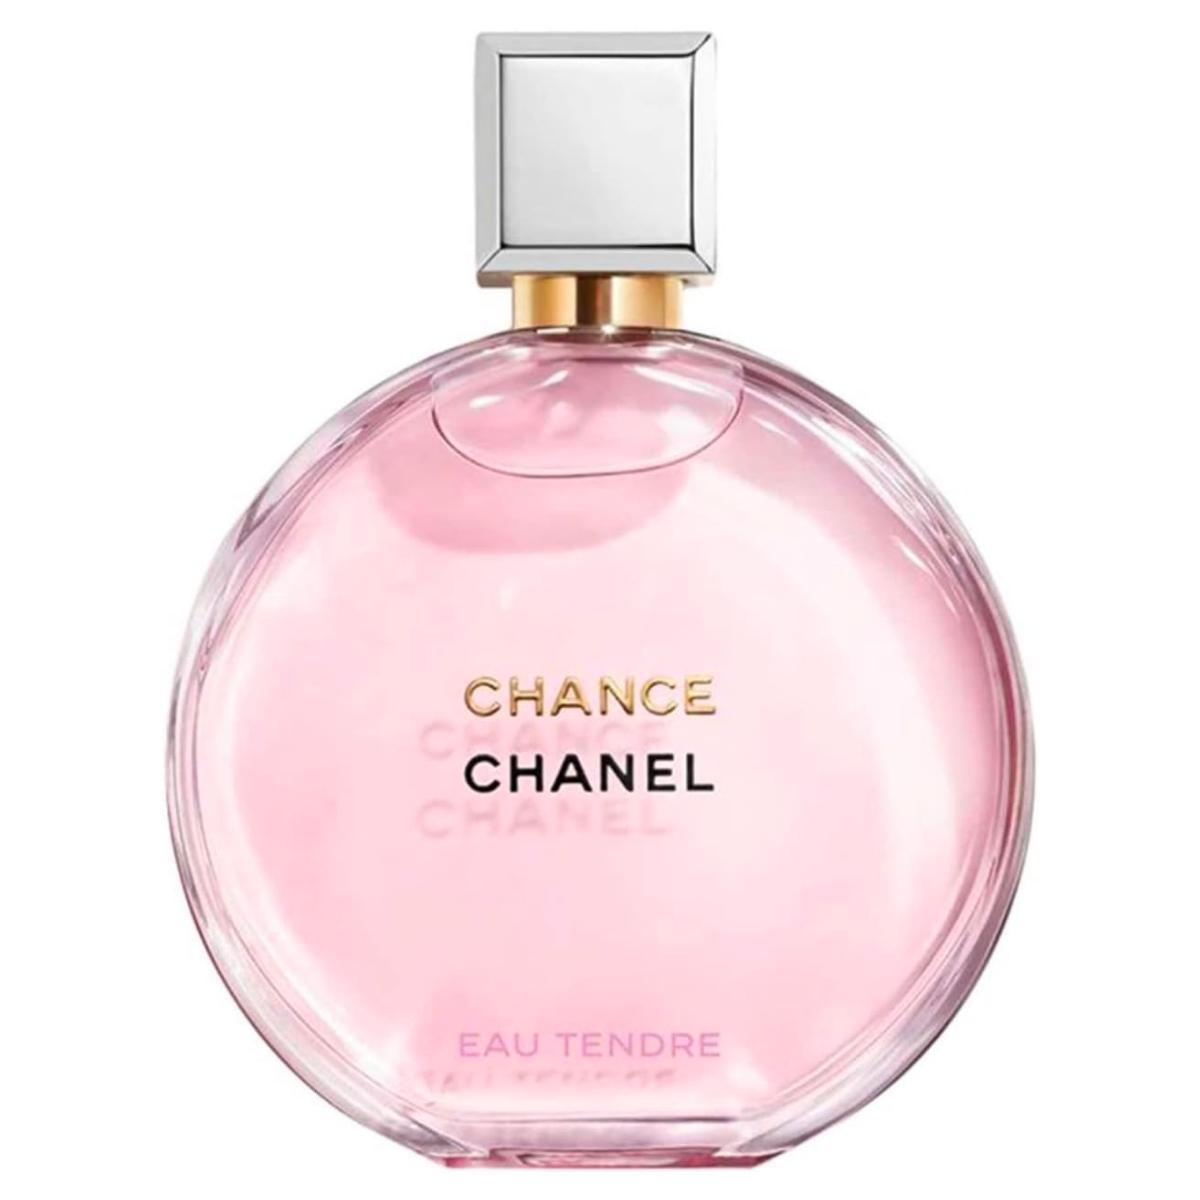 Chanel perfume - chance tendre by chanel - perfumes for women - eau de toilette,